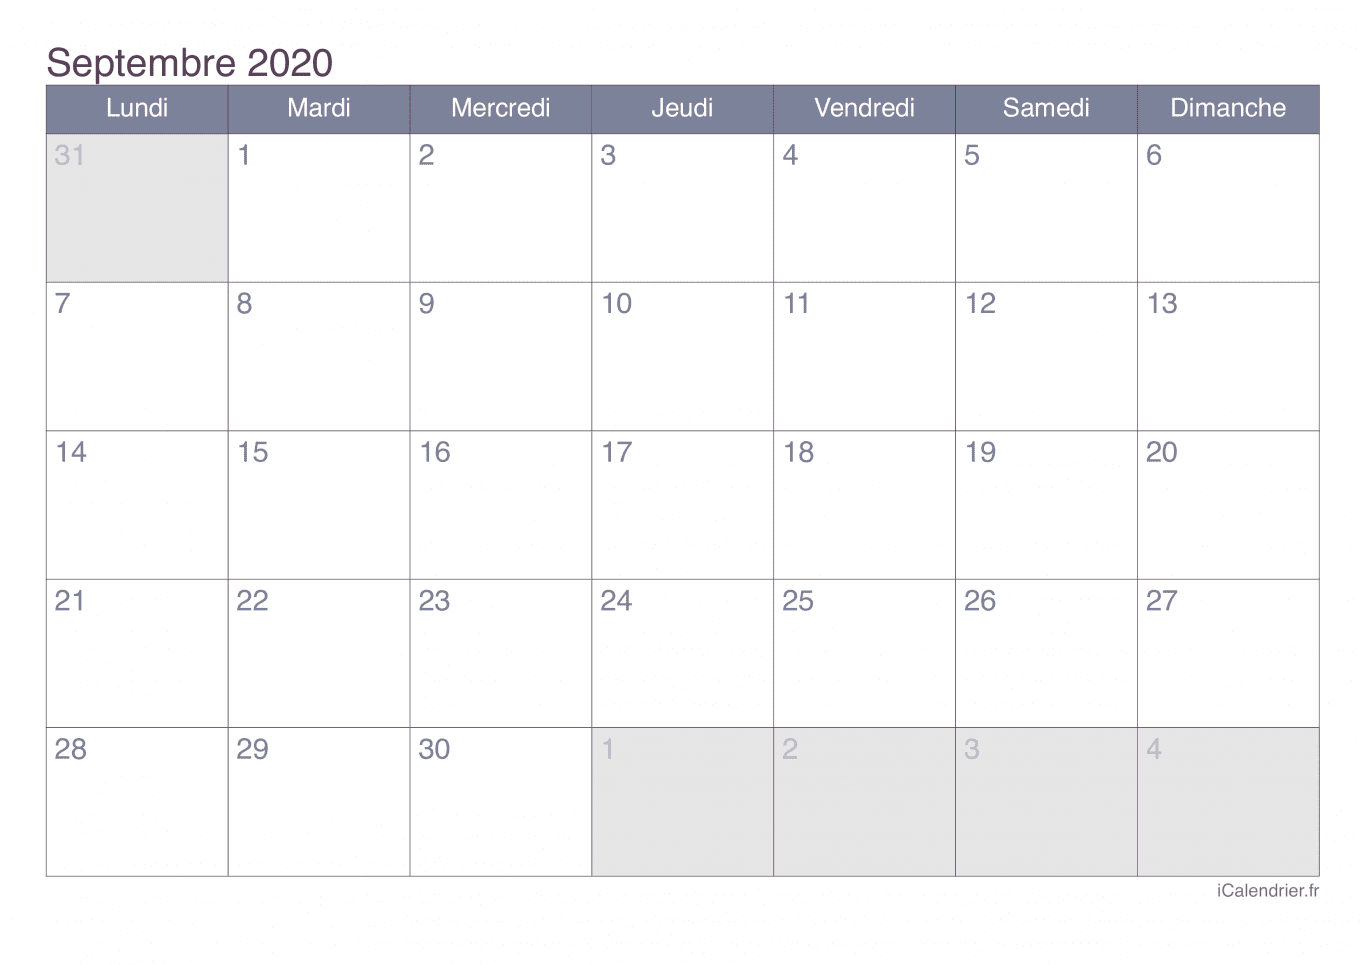 Calendrier de septembre 2020 - Office